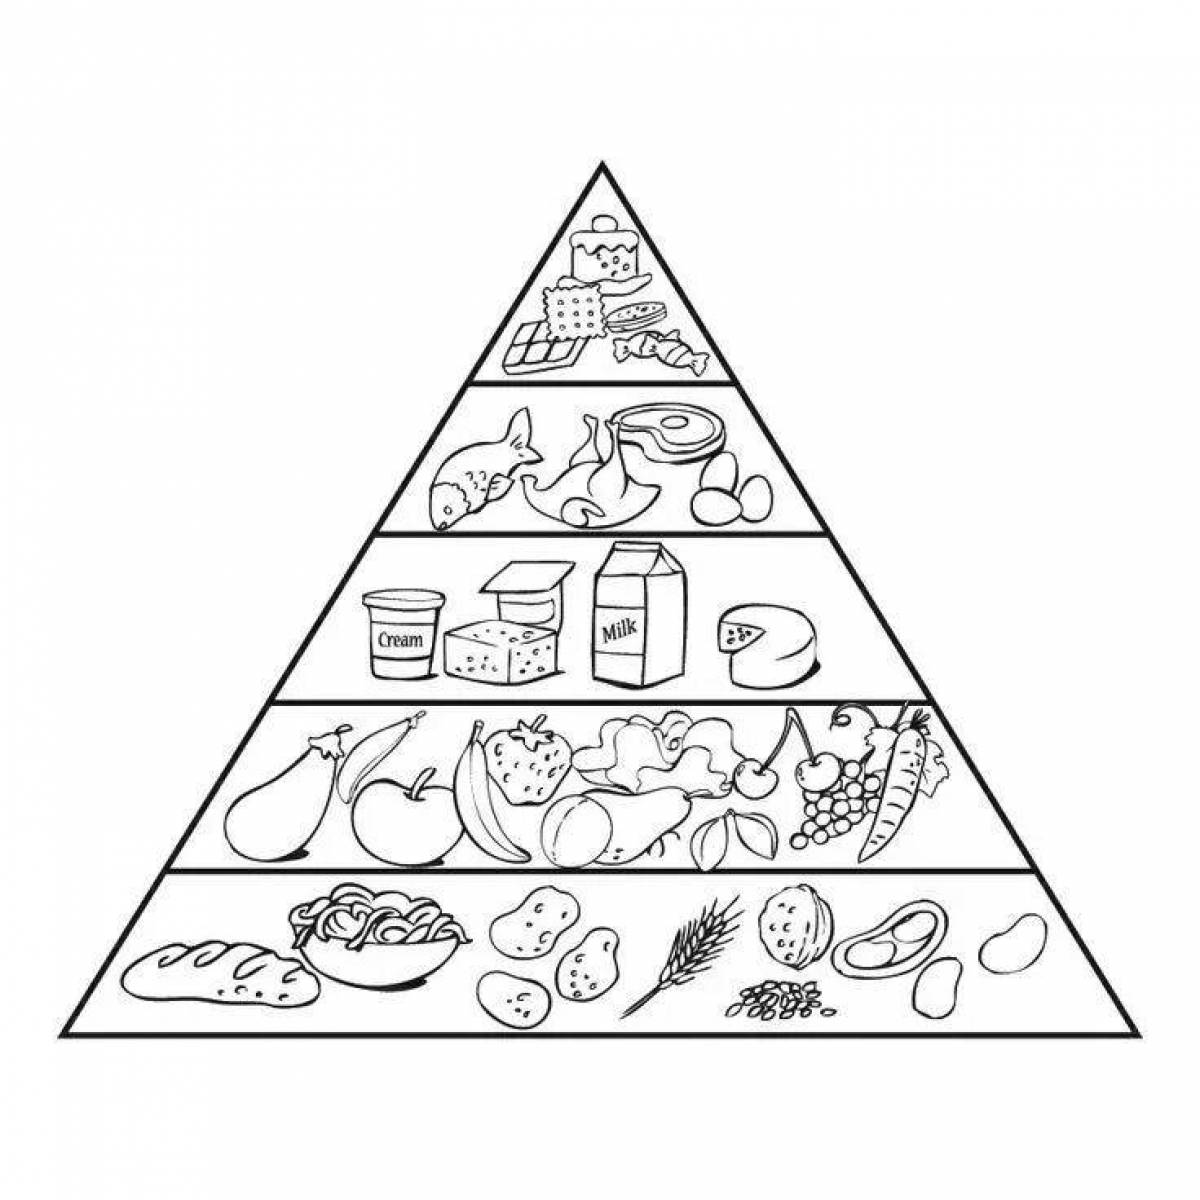 Food pyramid #15